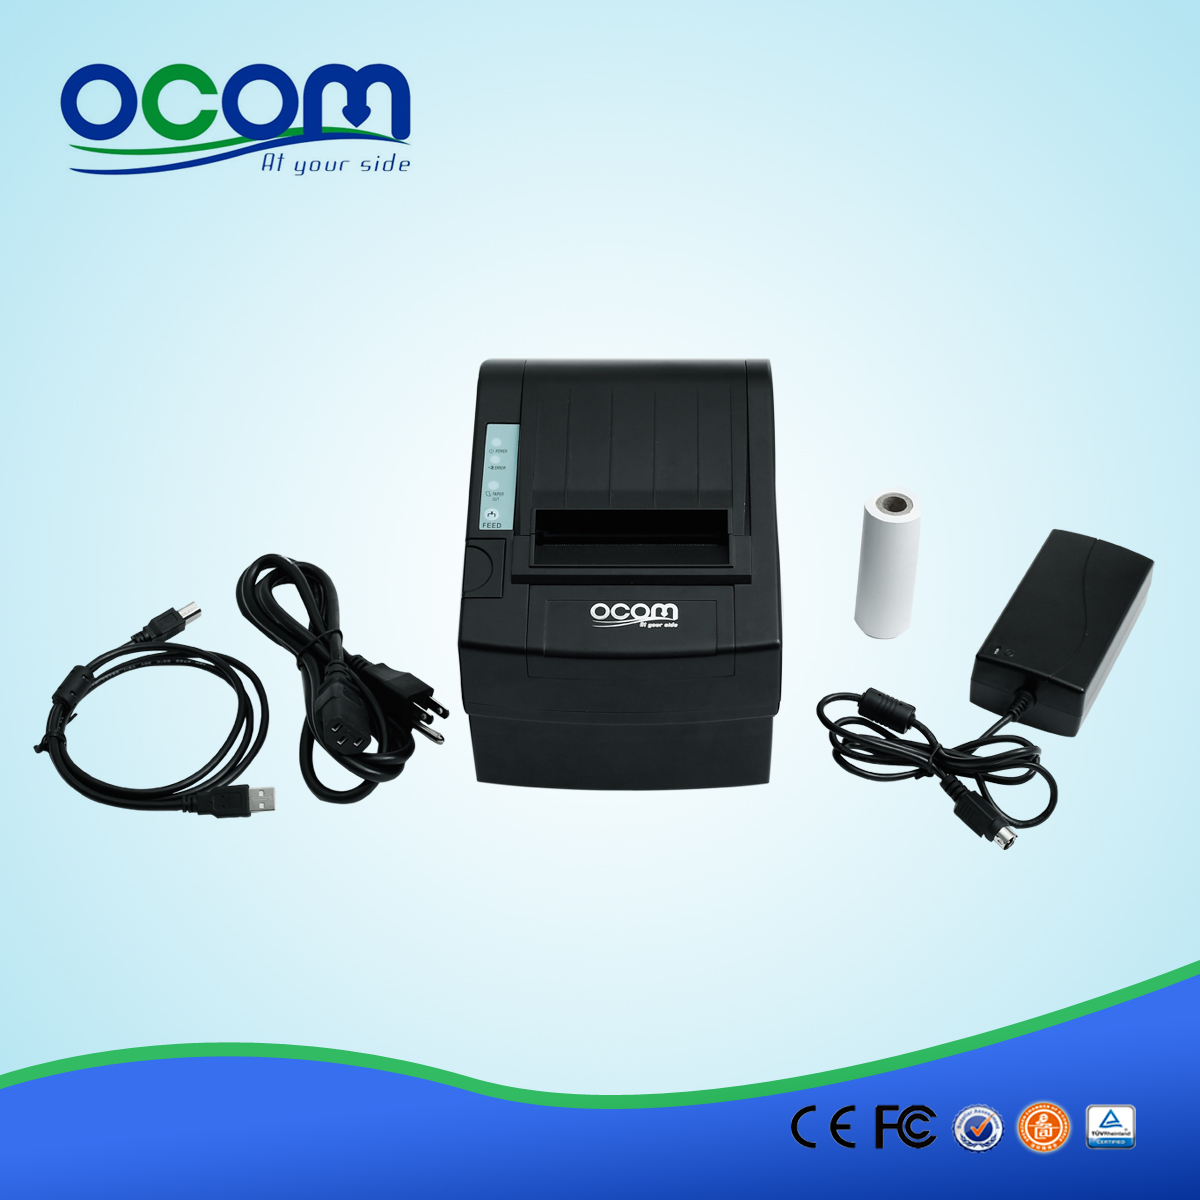 3 pulgadas Wifi Impresora Térmica de Recibo OCPP-806-W